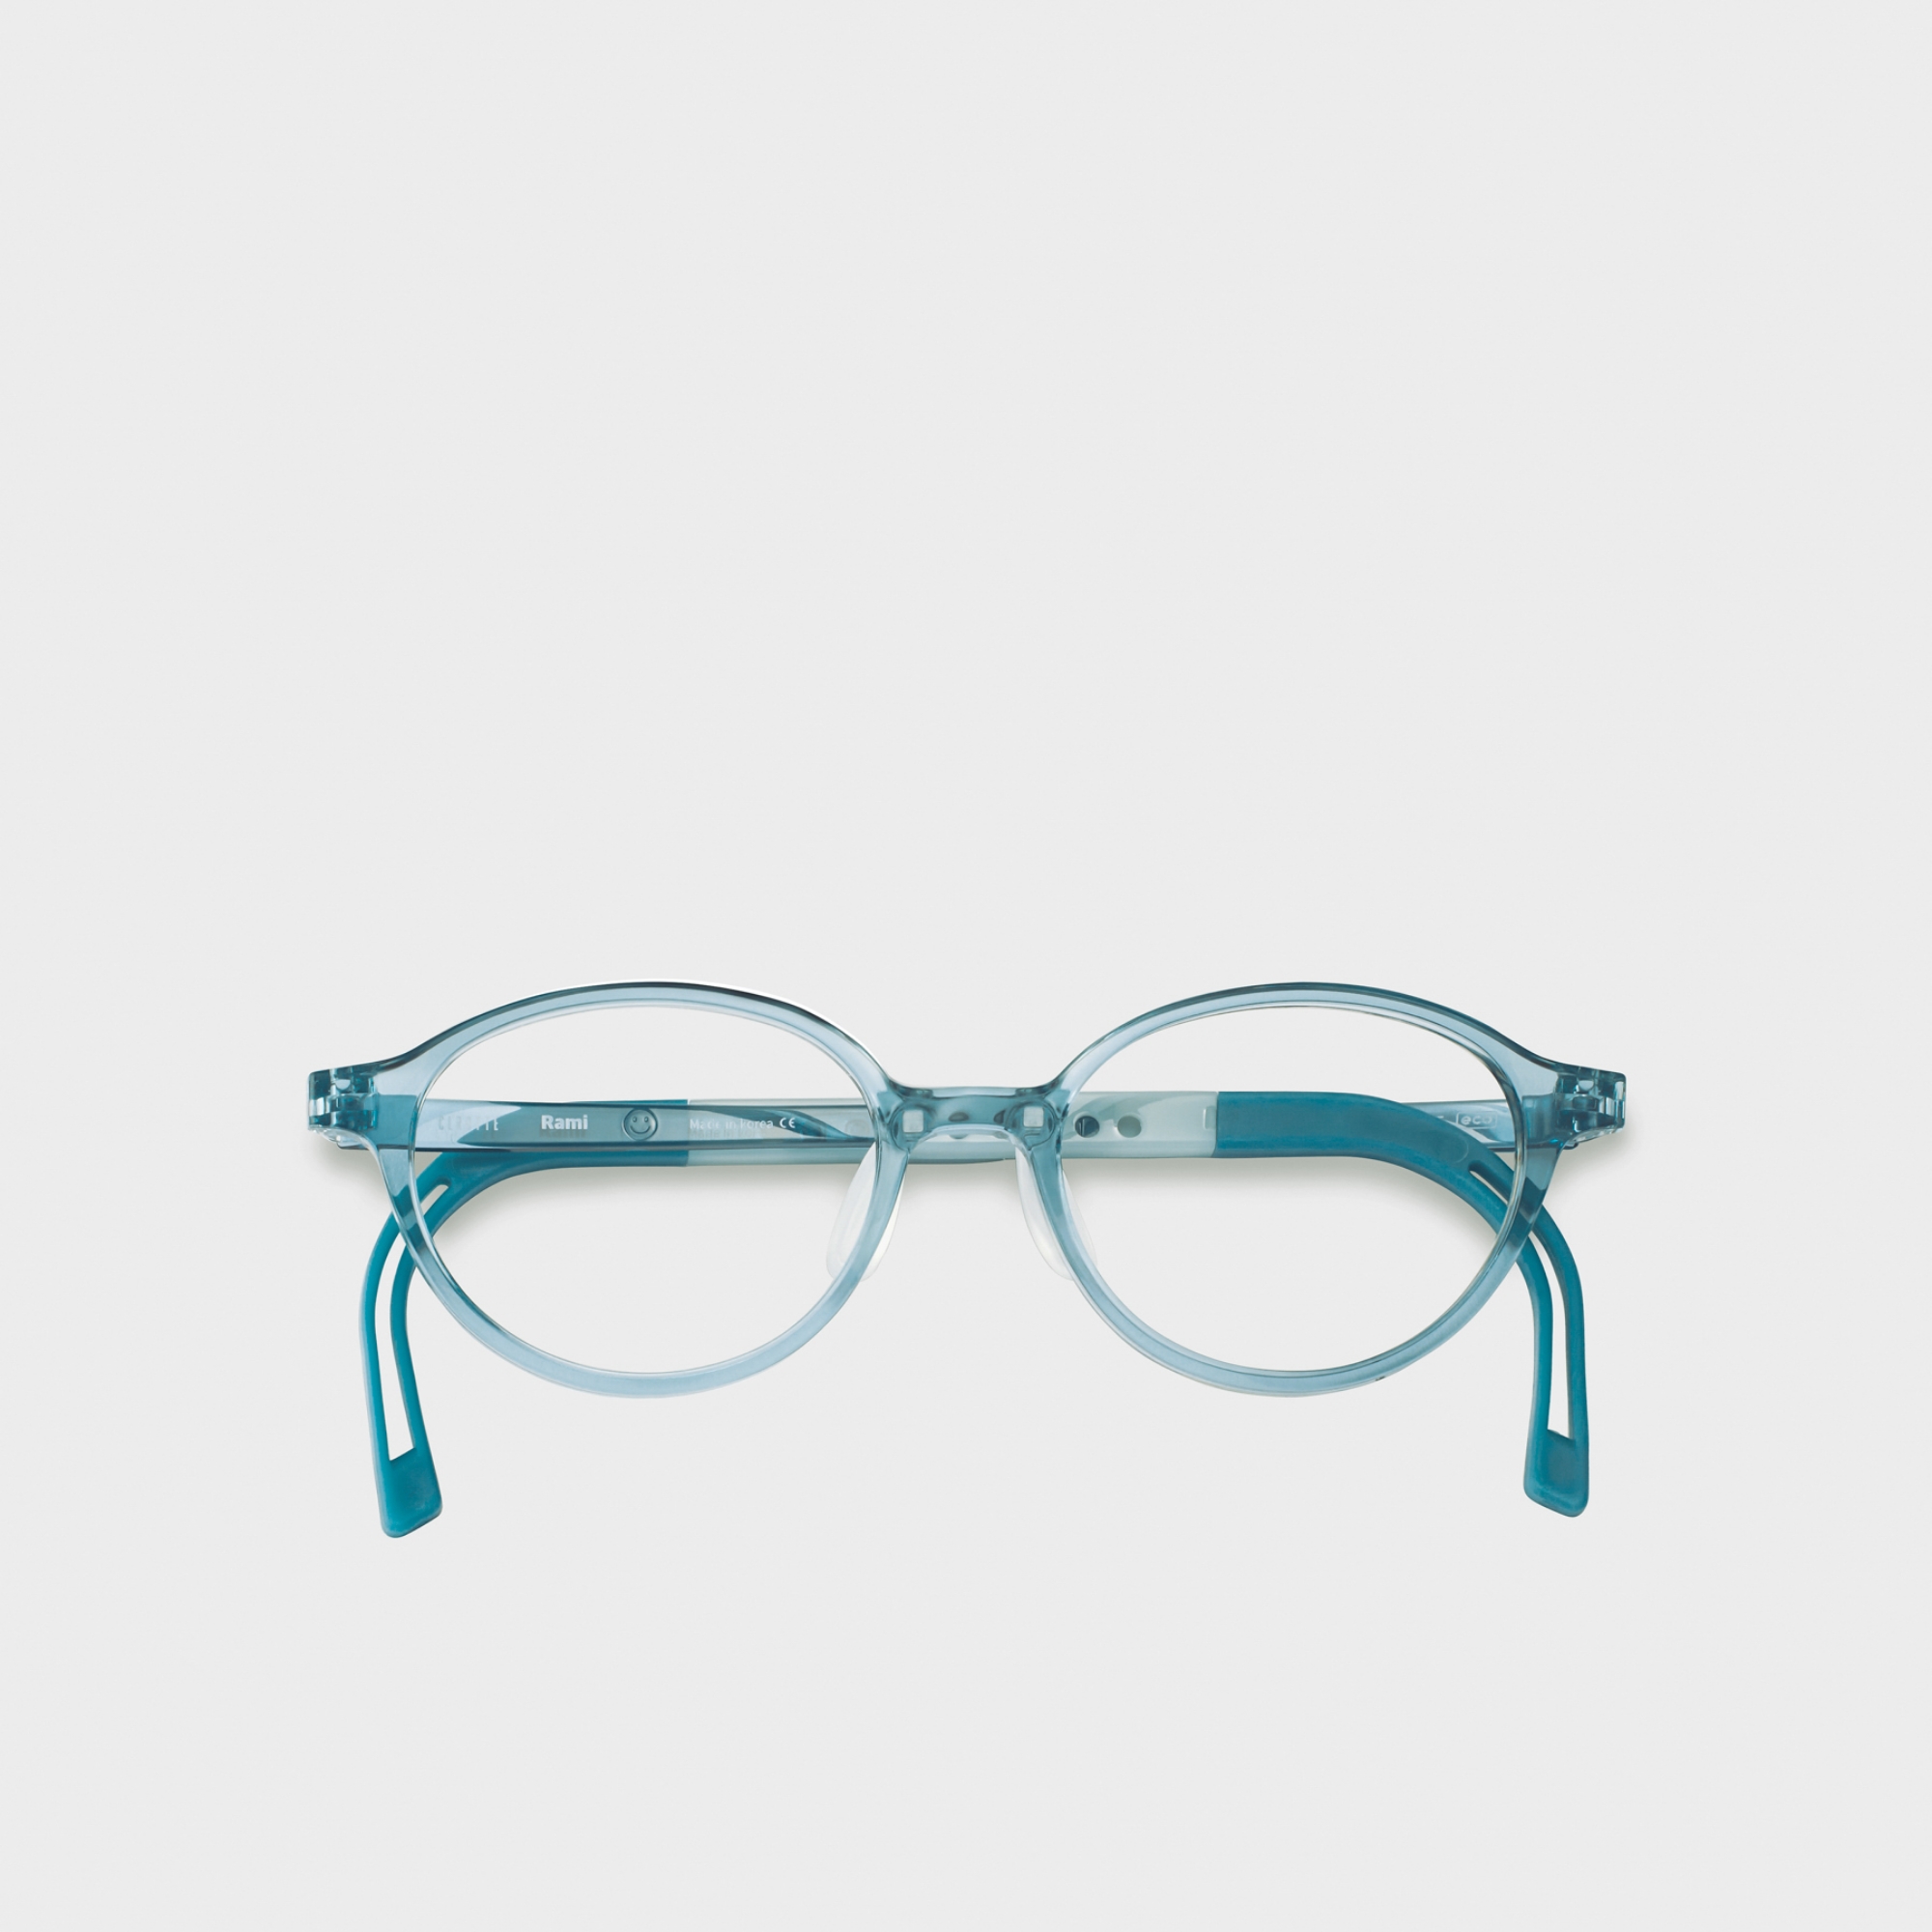 _CLROTTE_ Eyewear Glasses_ RAMI